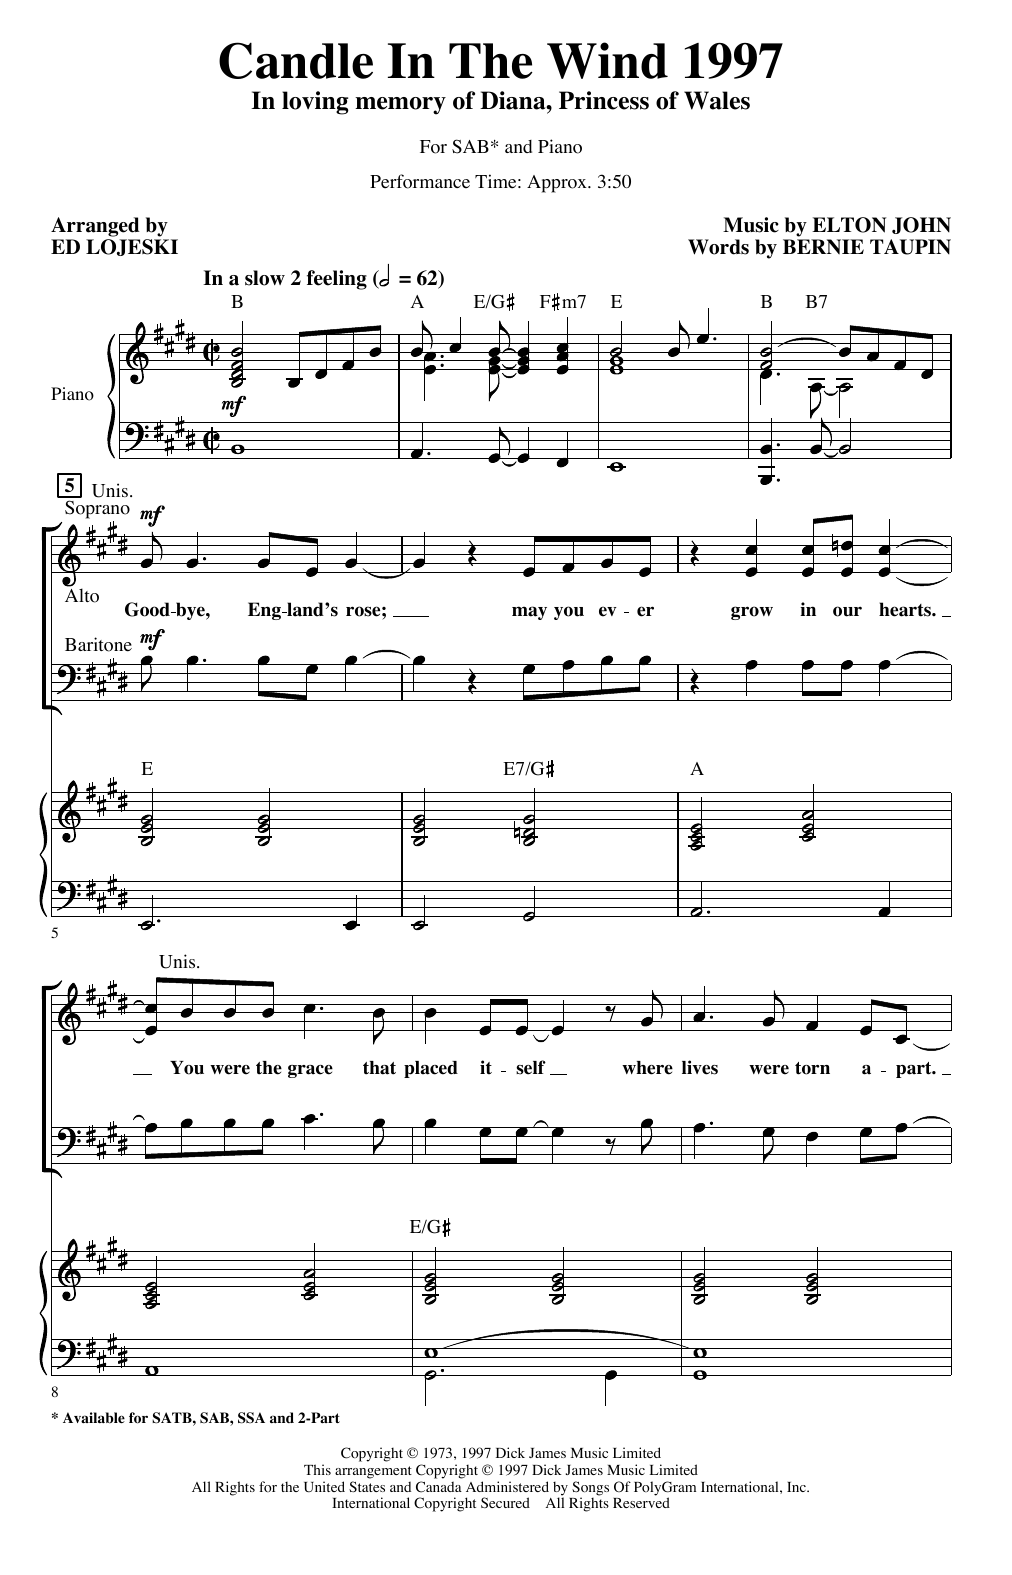 Elton John Candle In The Wind (arr. Ed Lojeski) Sheet Music Notes & Chords for 2-Part Choir - Download or Print PDF